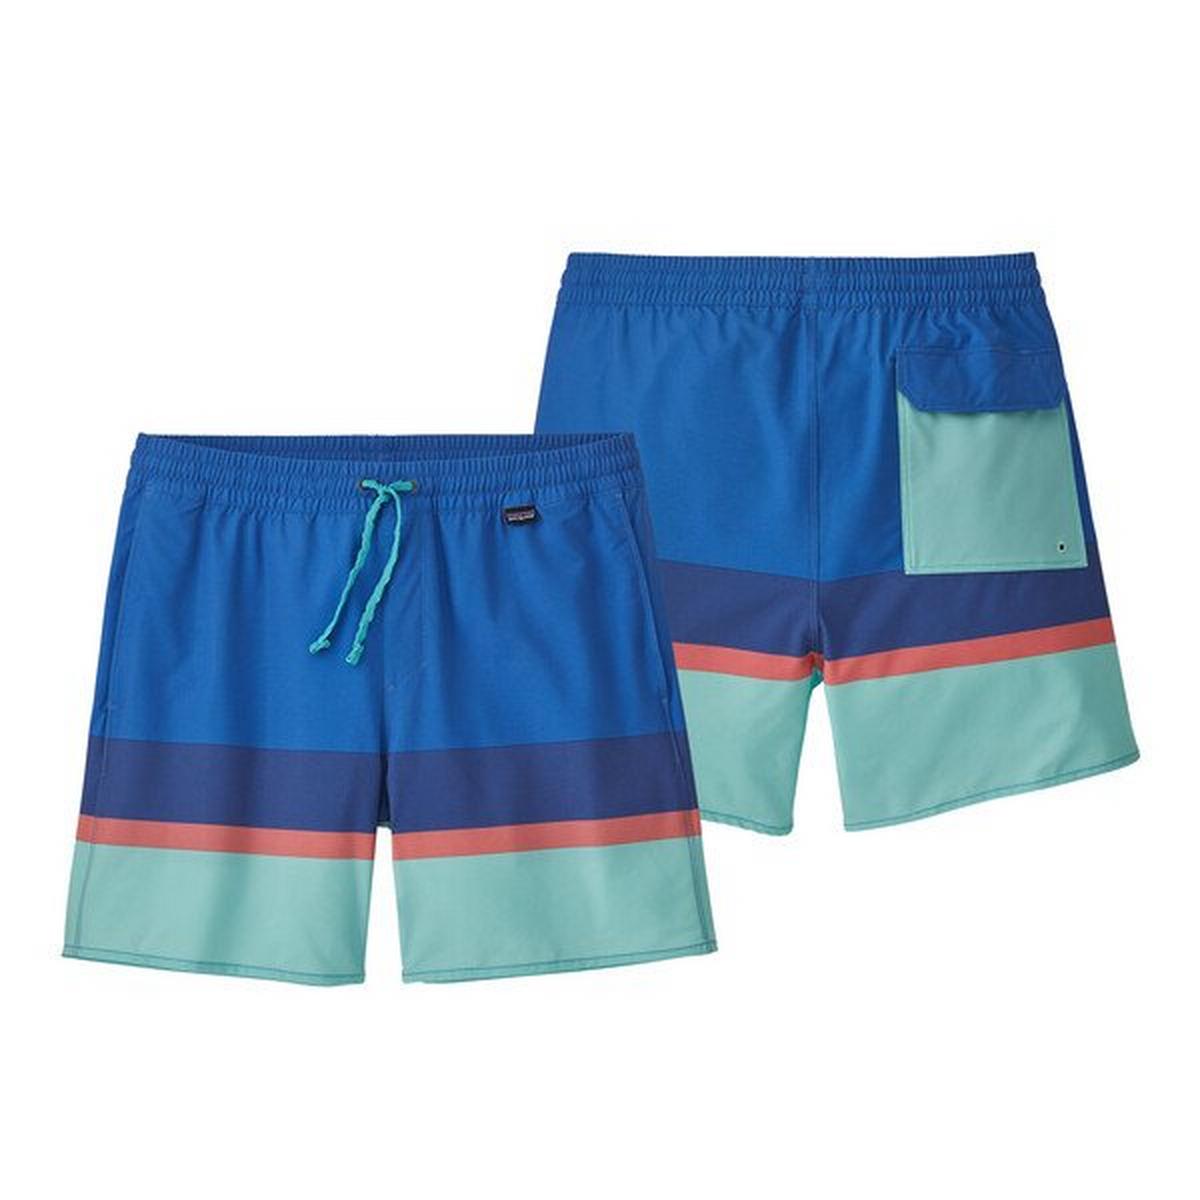 Patagonia Men's Hydropeak Volley Shorts (16") - Topa Stripe/Teal